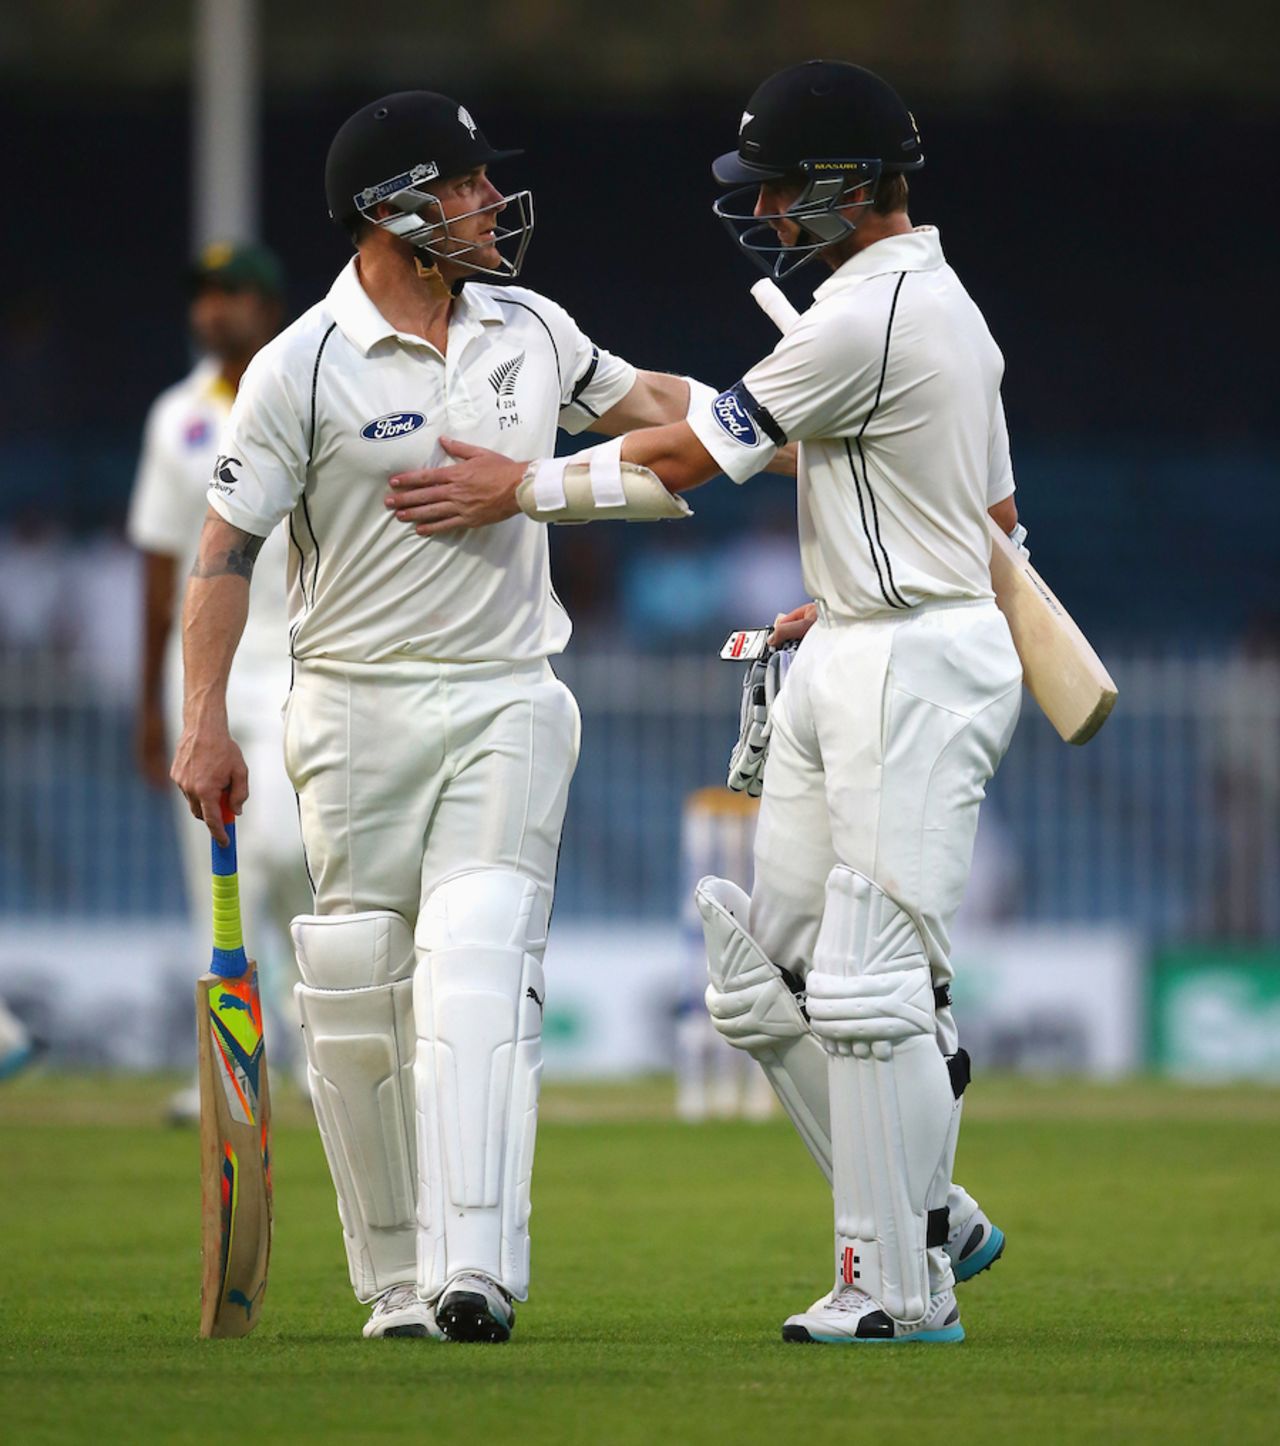 Brendon McCullum Kane Williamson walk back at stumps, Pakistan v New Zealand, 3rd Test, Sharjah, 2nd day, November 28, 2014